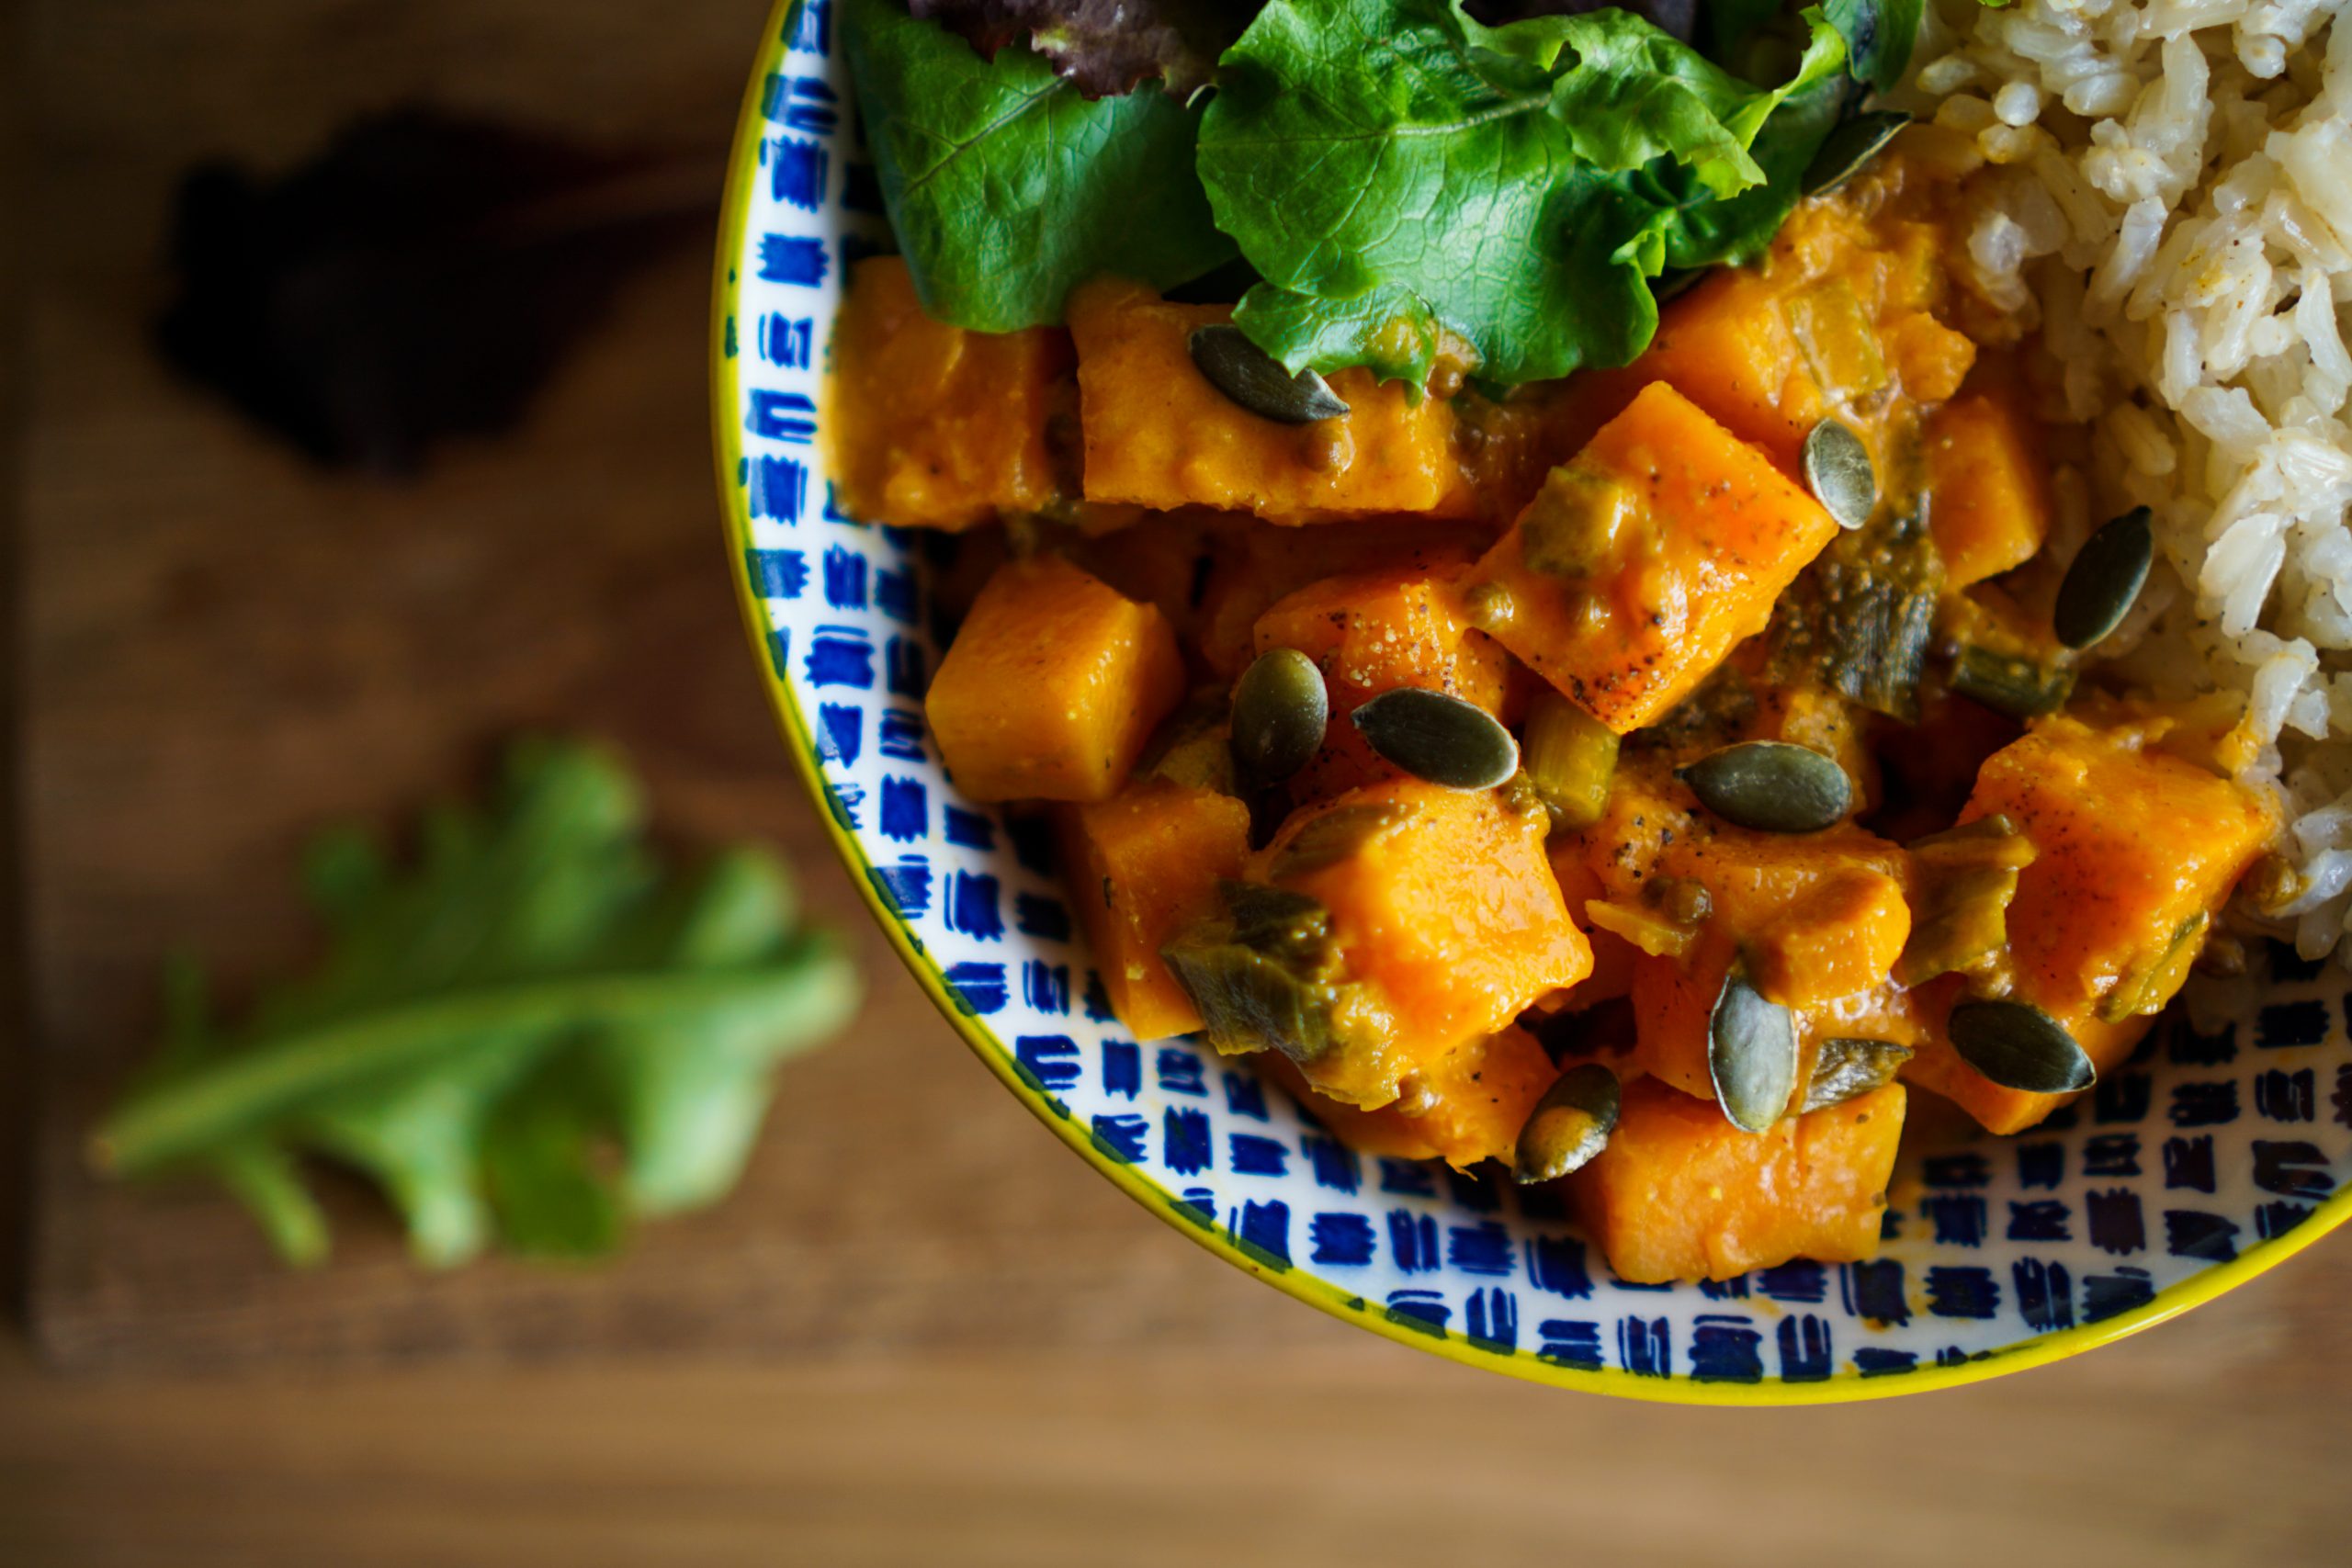 Curry vegan de patates douces